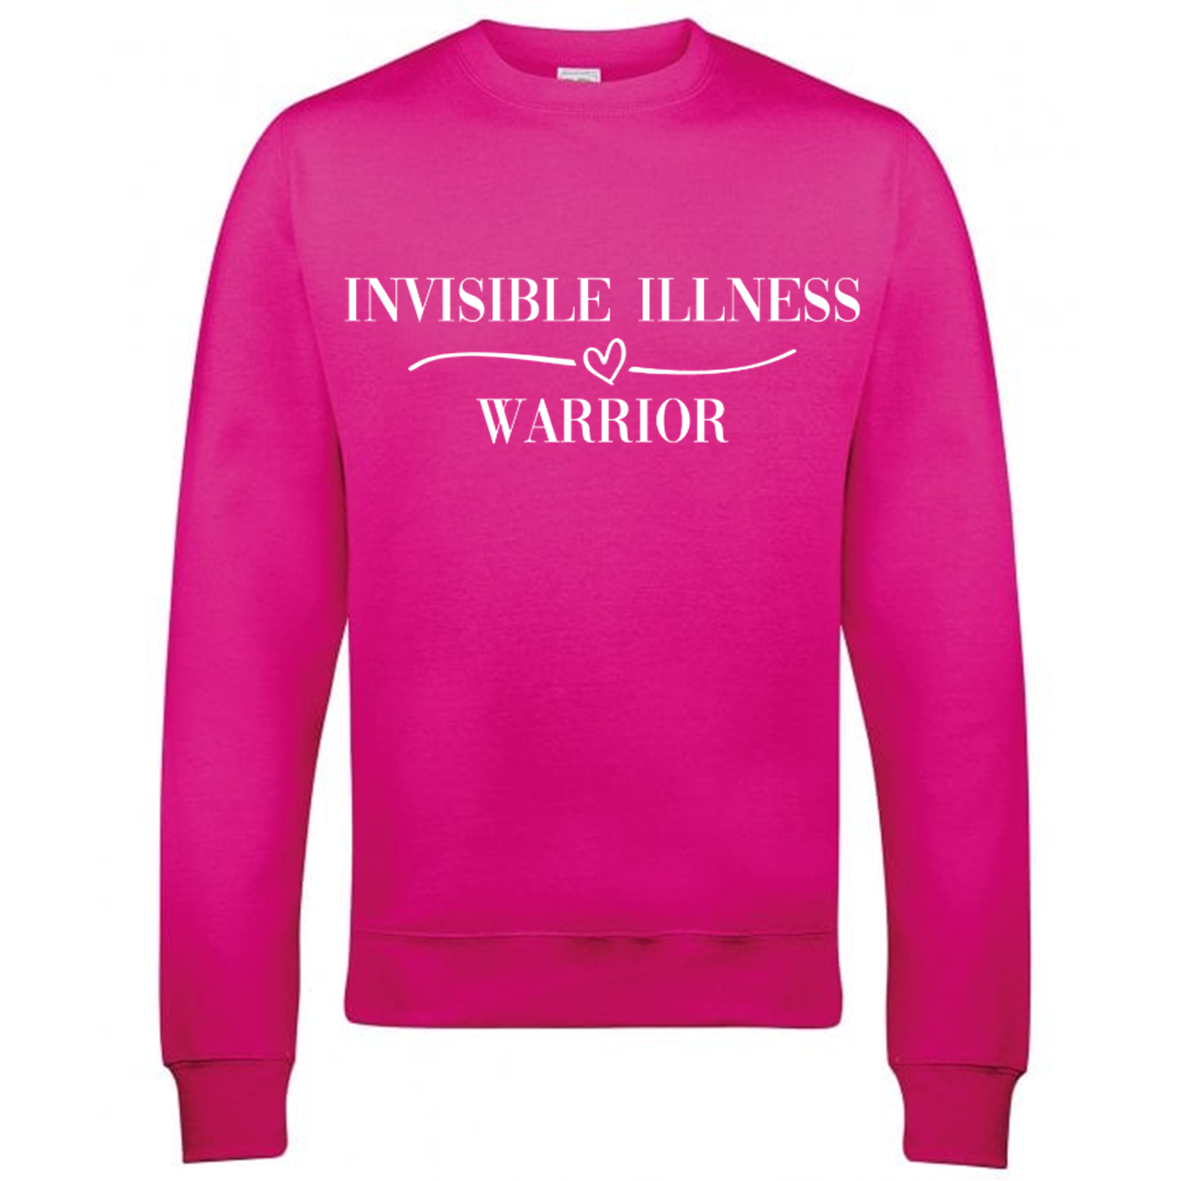 Invisible Illness Warrior Sweatshirt